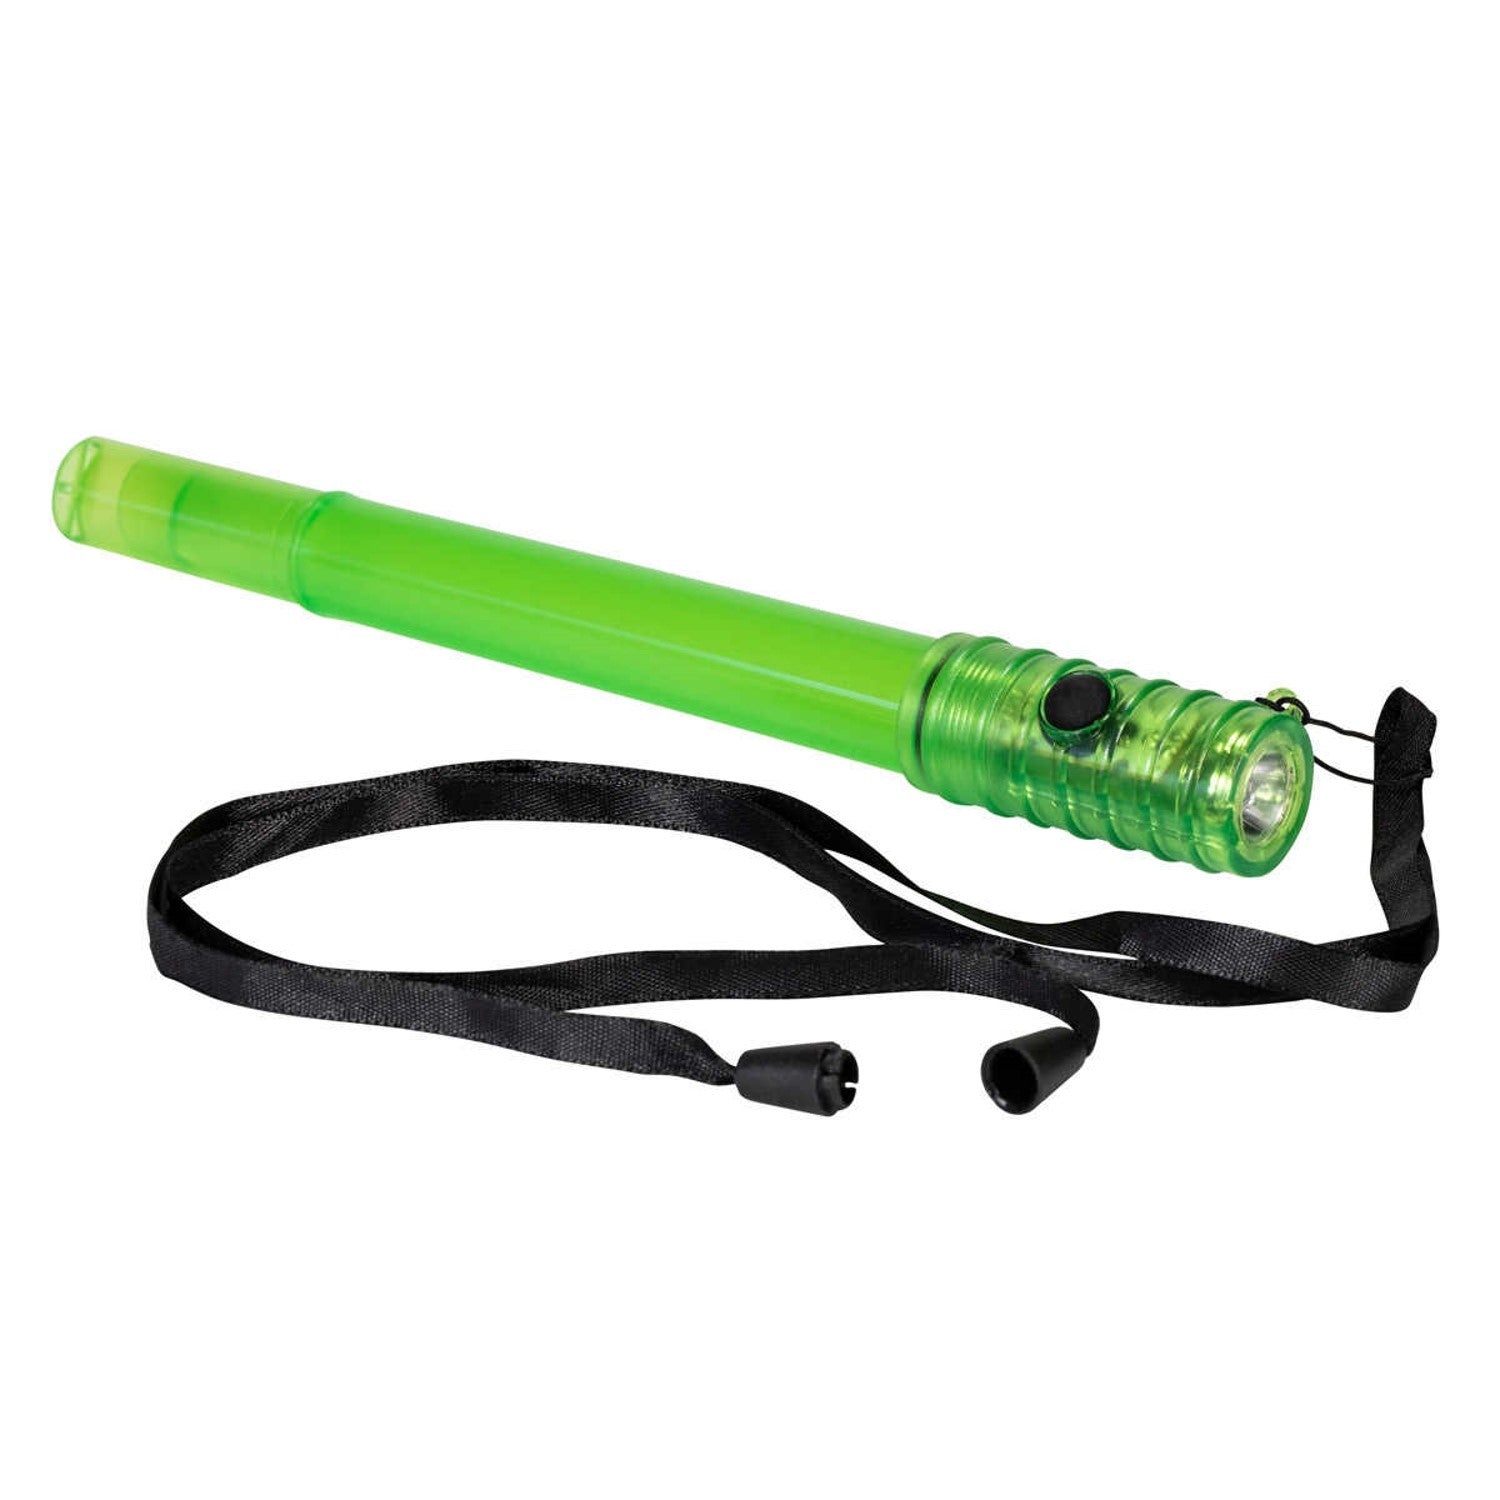 LifeGear LED Reusable Glow Stick 2 Pack - Green